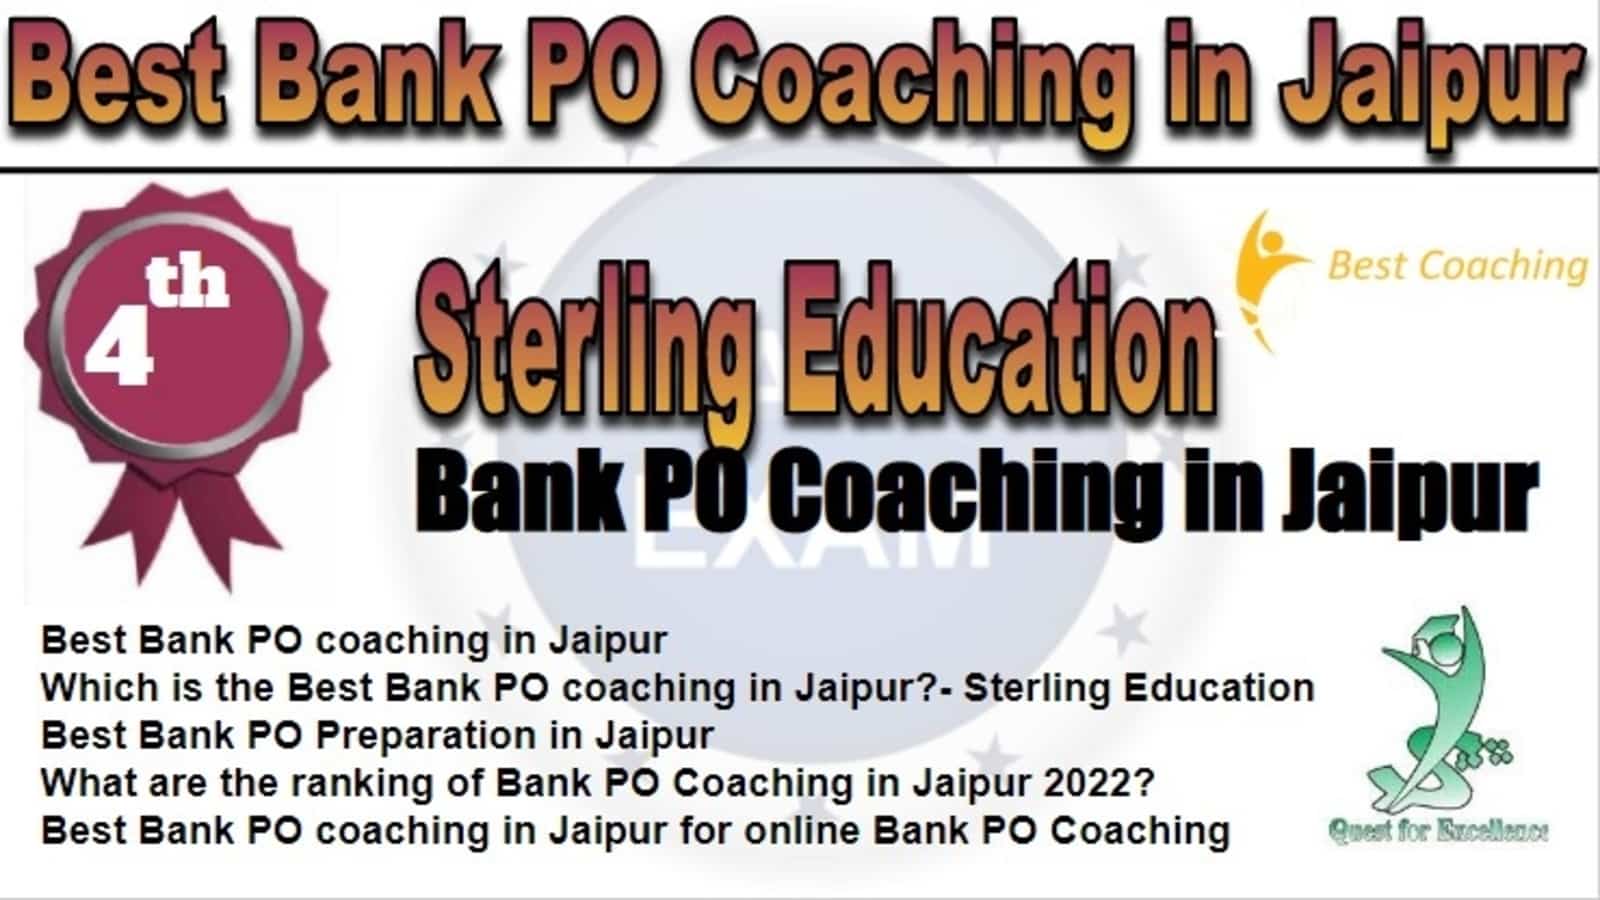 Rank 4 Best Bank PO Coaching in Jaipur